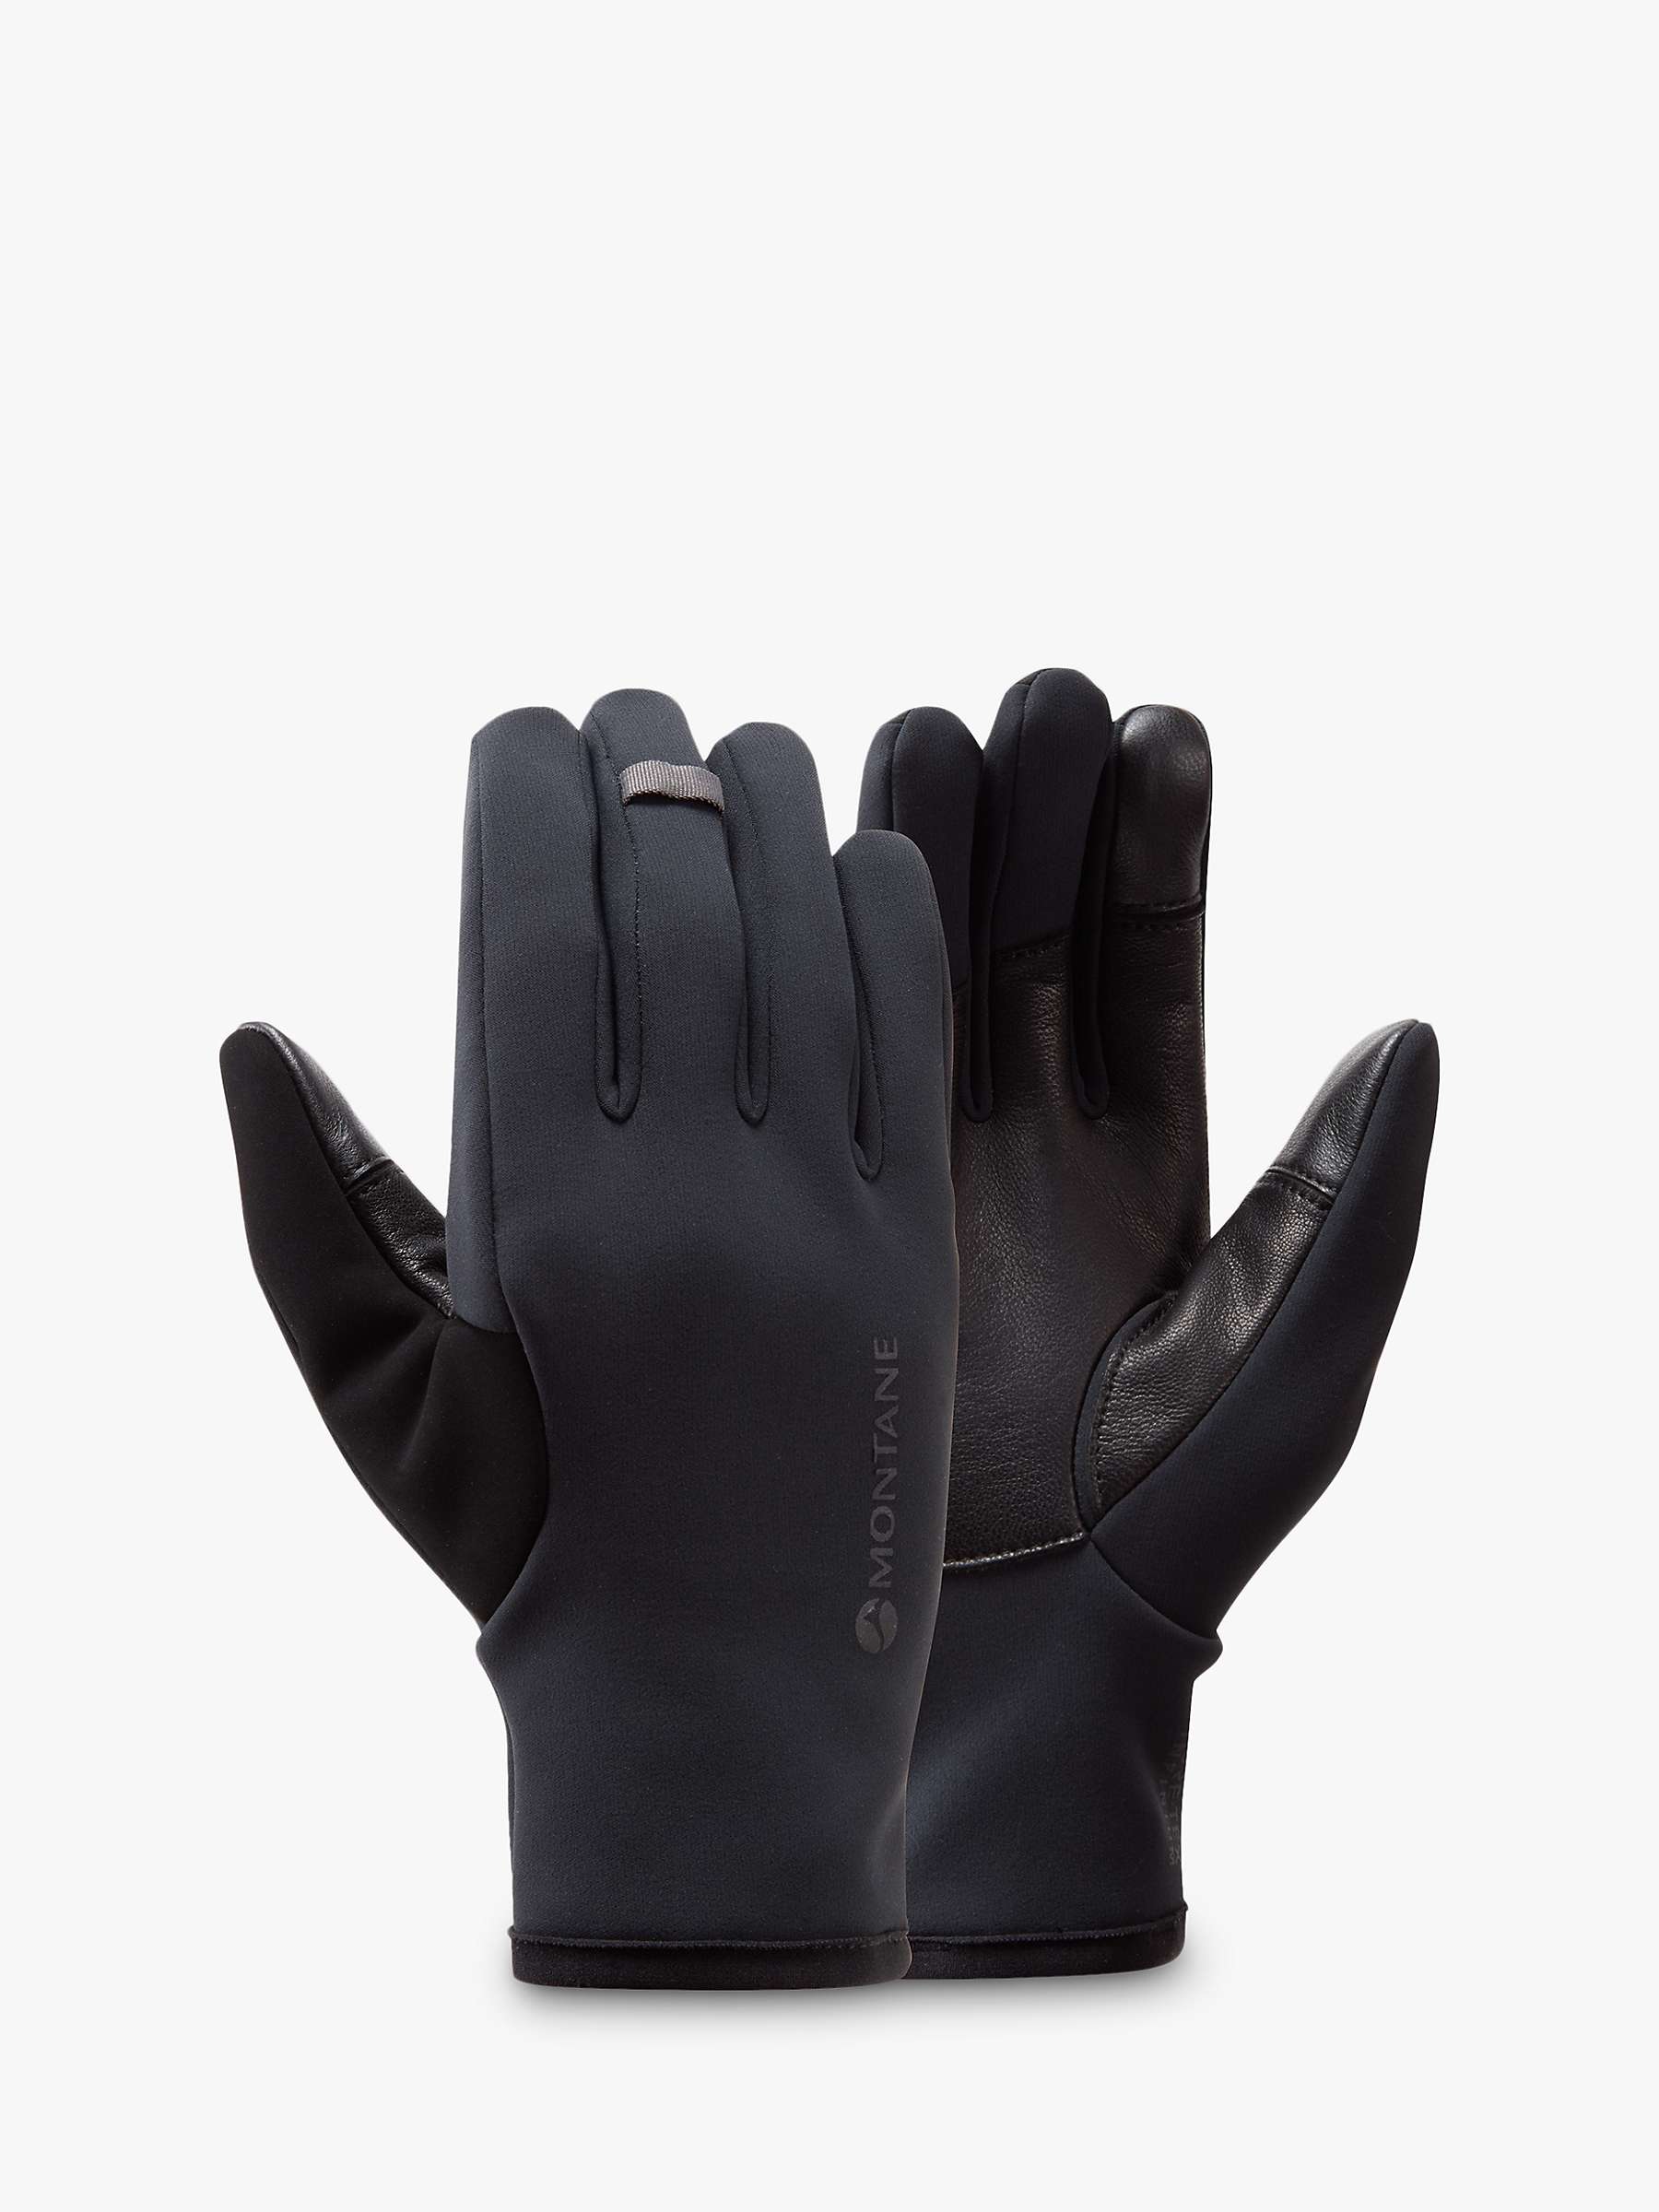 Buy Montane Men's Windjammer Lite Windproof Gloves, Black Online at johnlewis.com